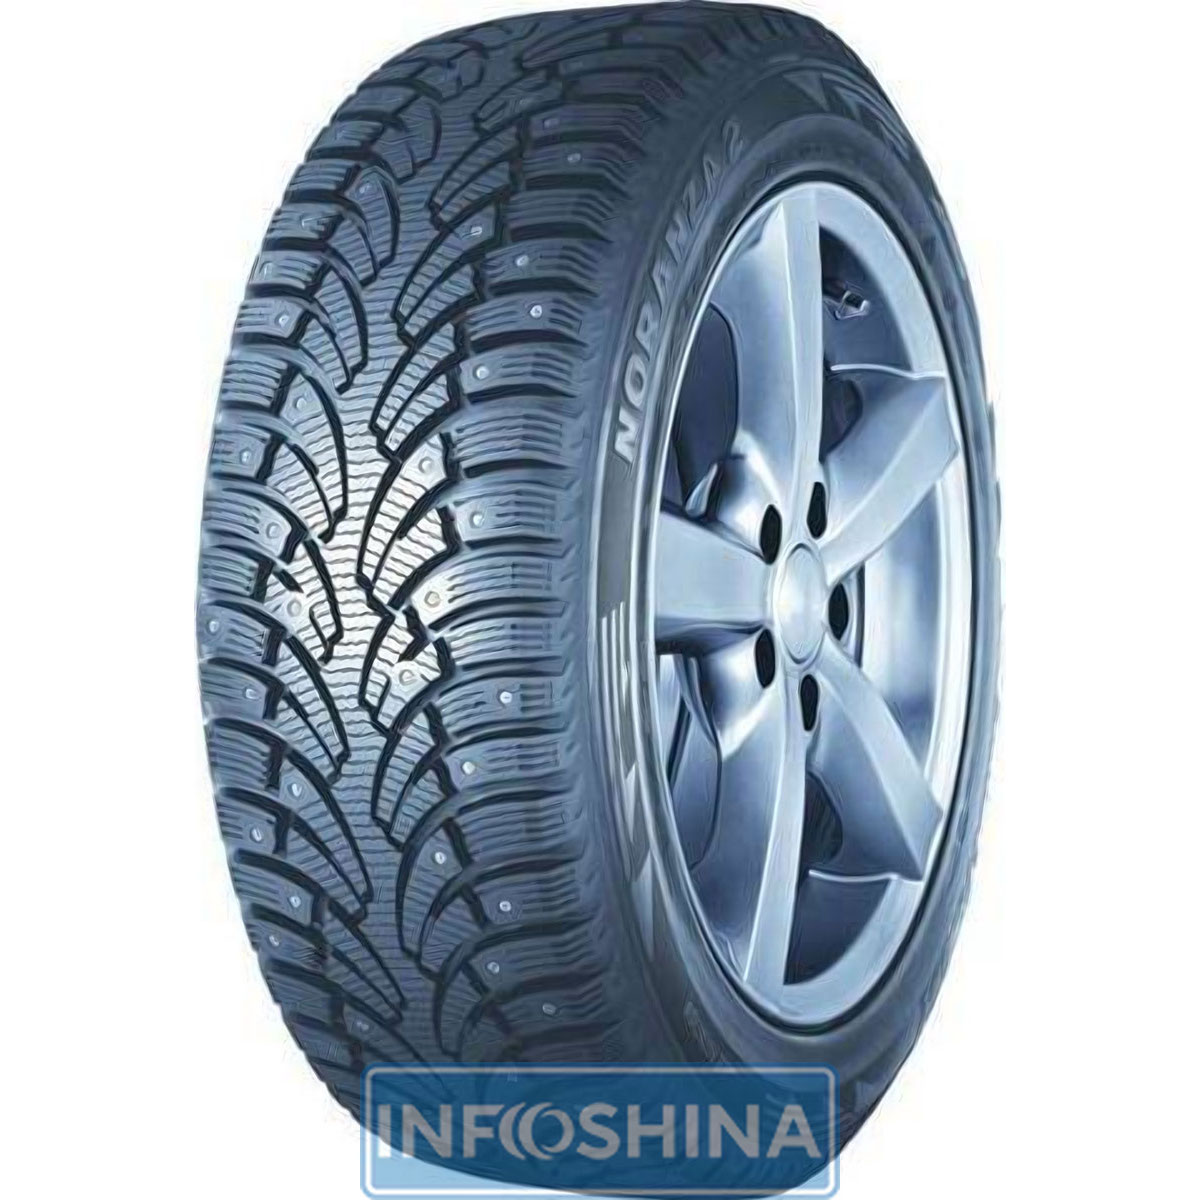 Купить шины Bridgestone Noranza 2 185/65 R14 90T (под шип)